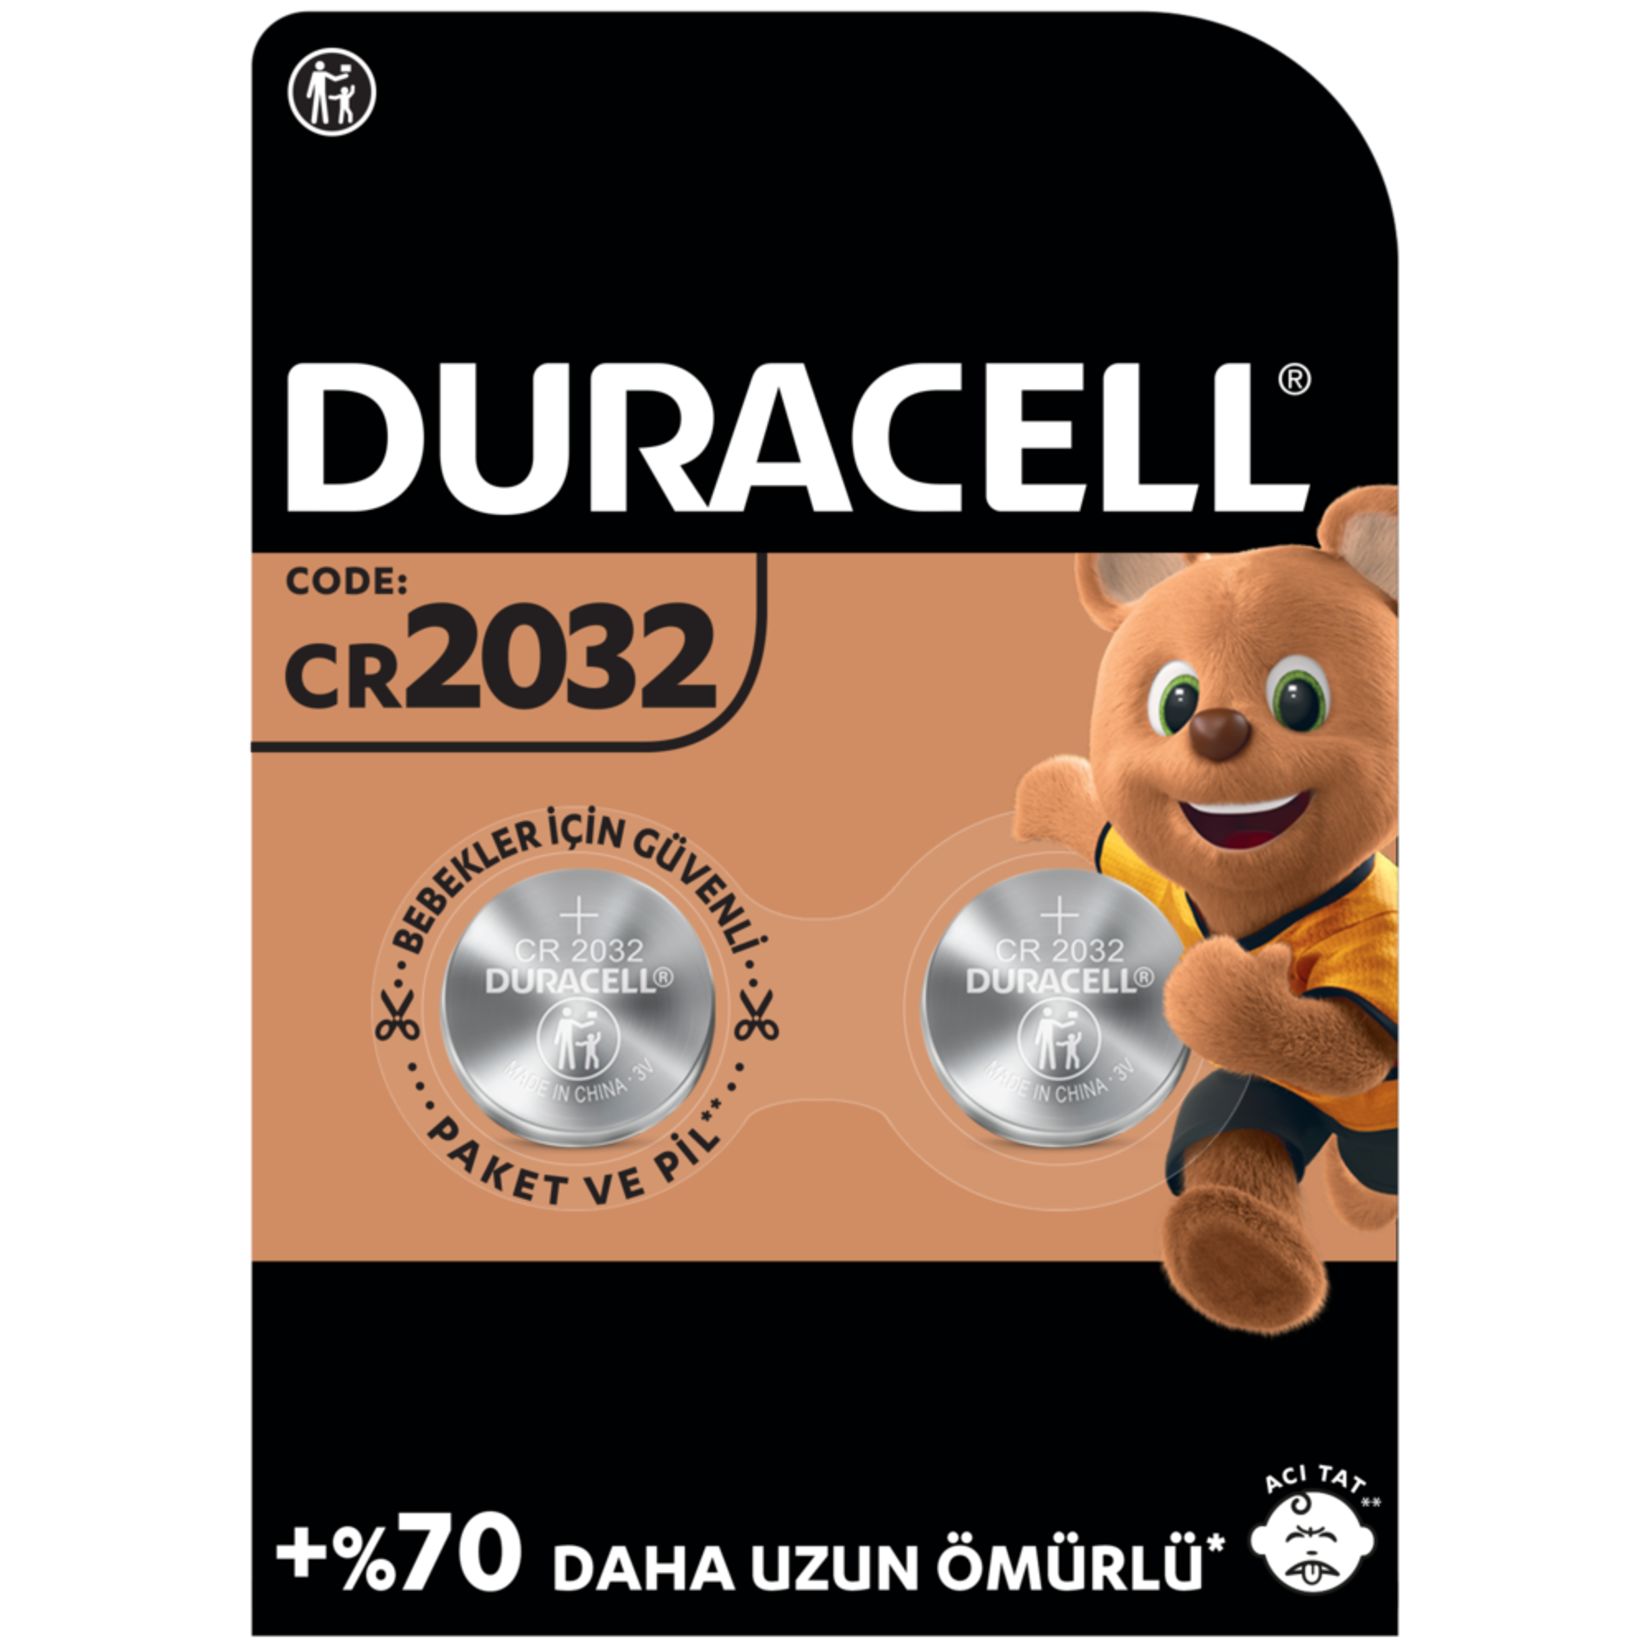 Duracell Özel 2032 Lityum Düğme Pil 3V (CR2032), 2’li Paket